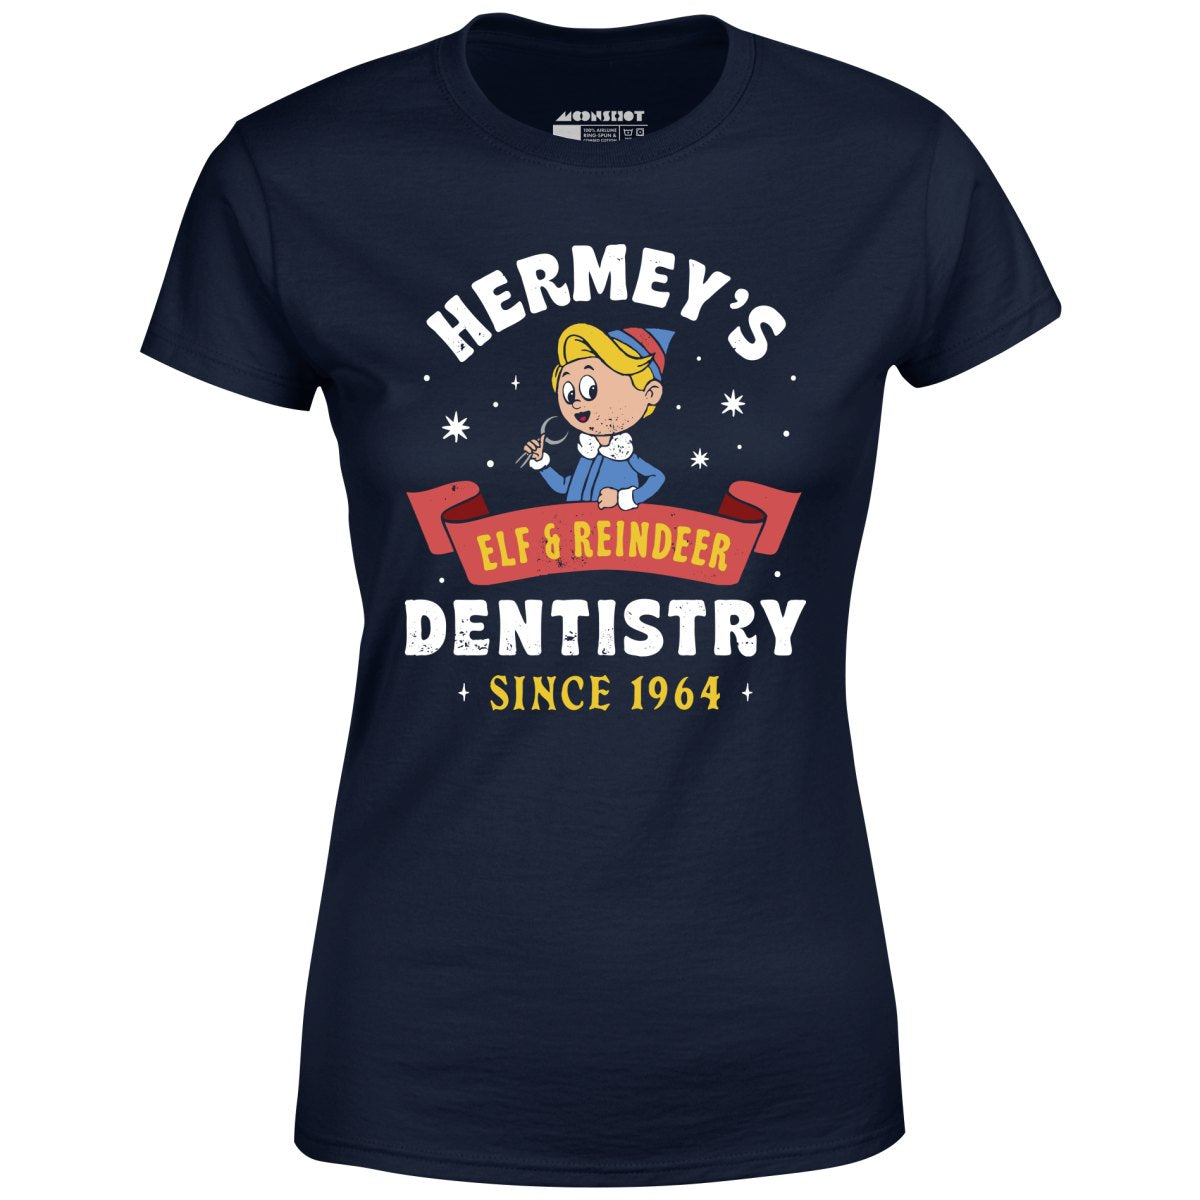 Hermey's Dentistry - Women's T-Shirt